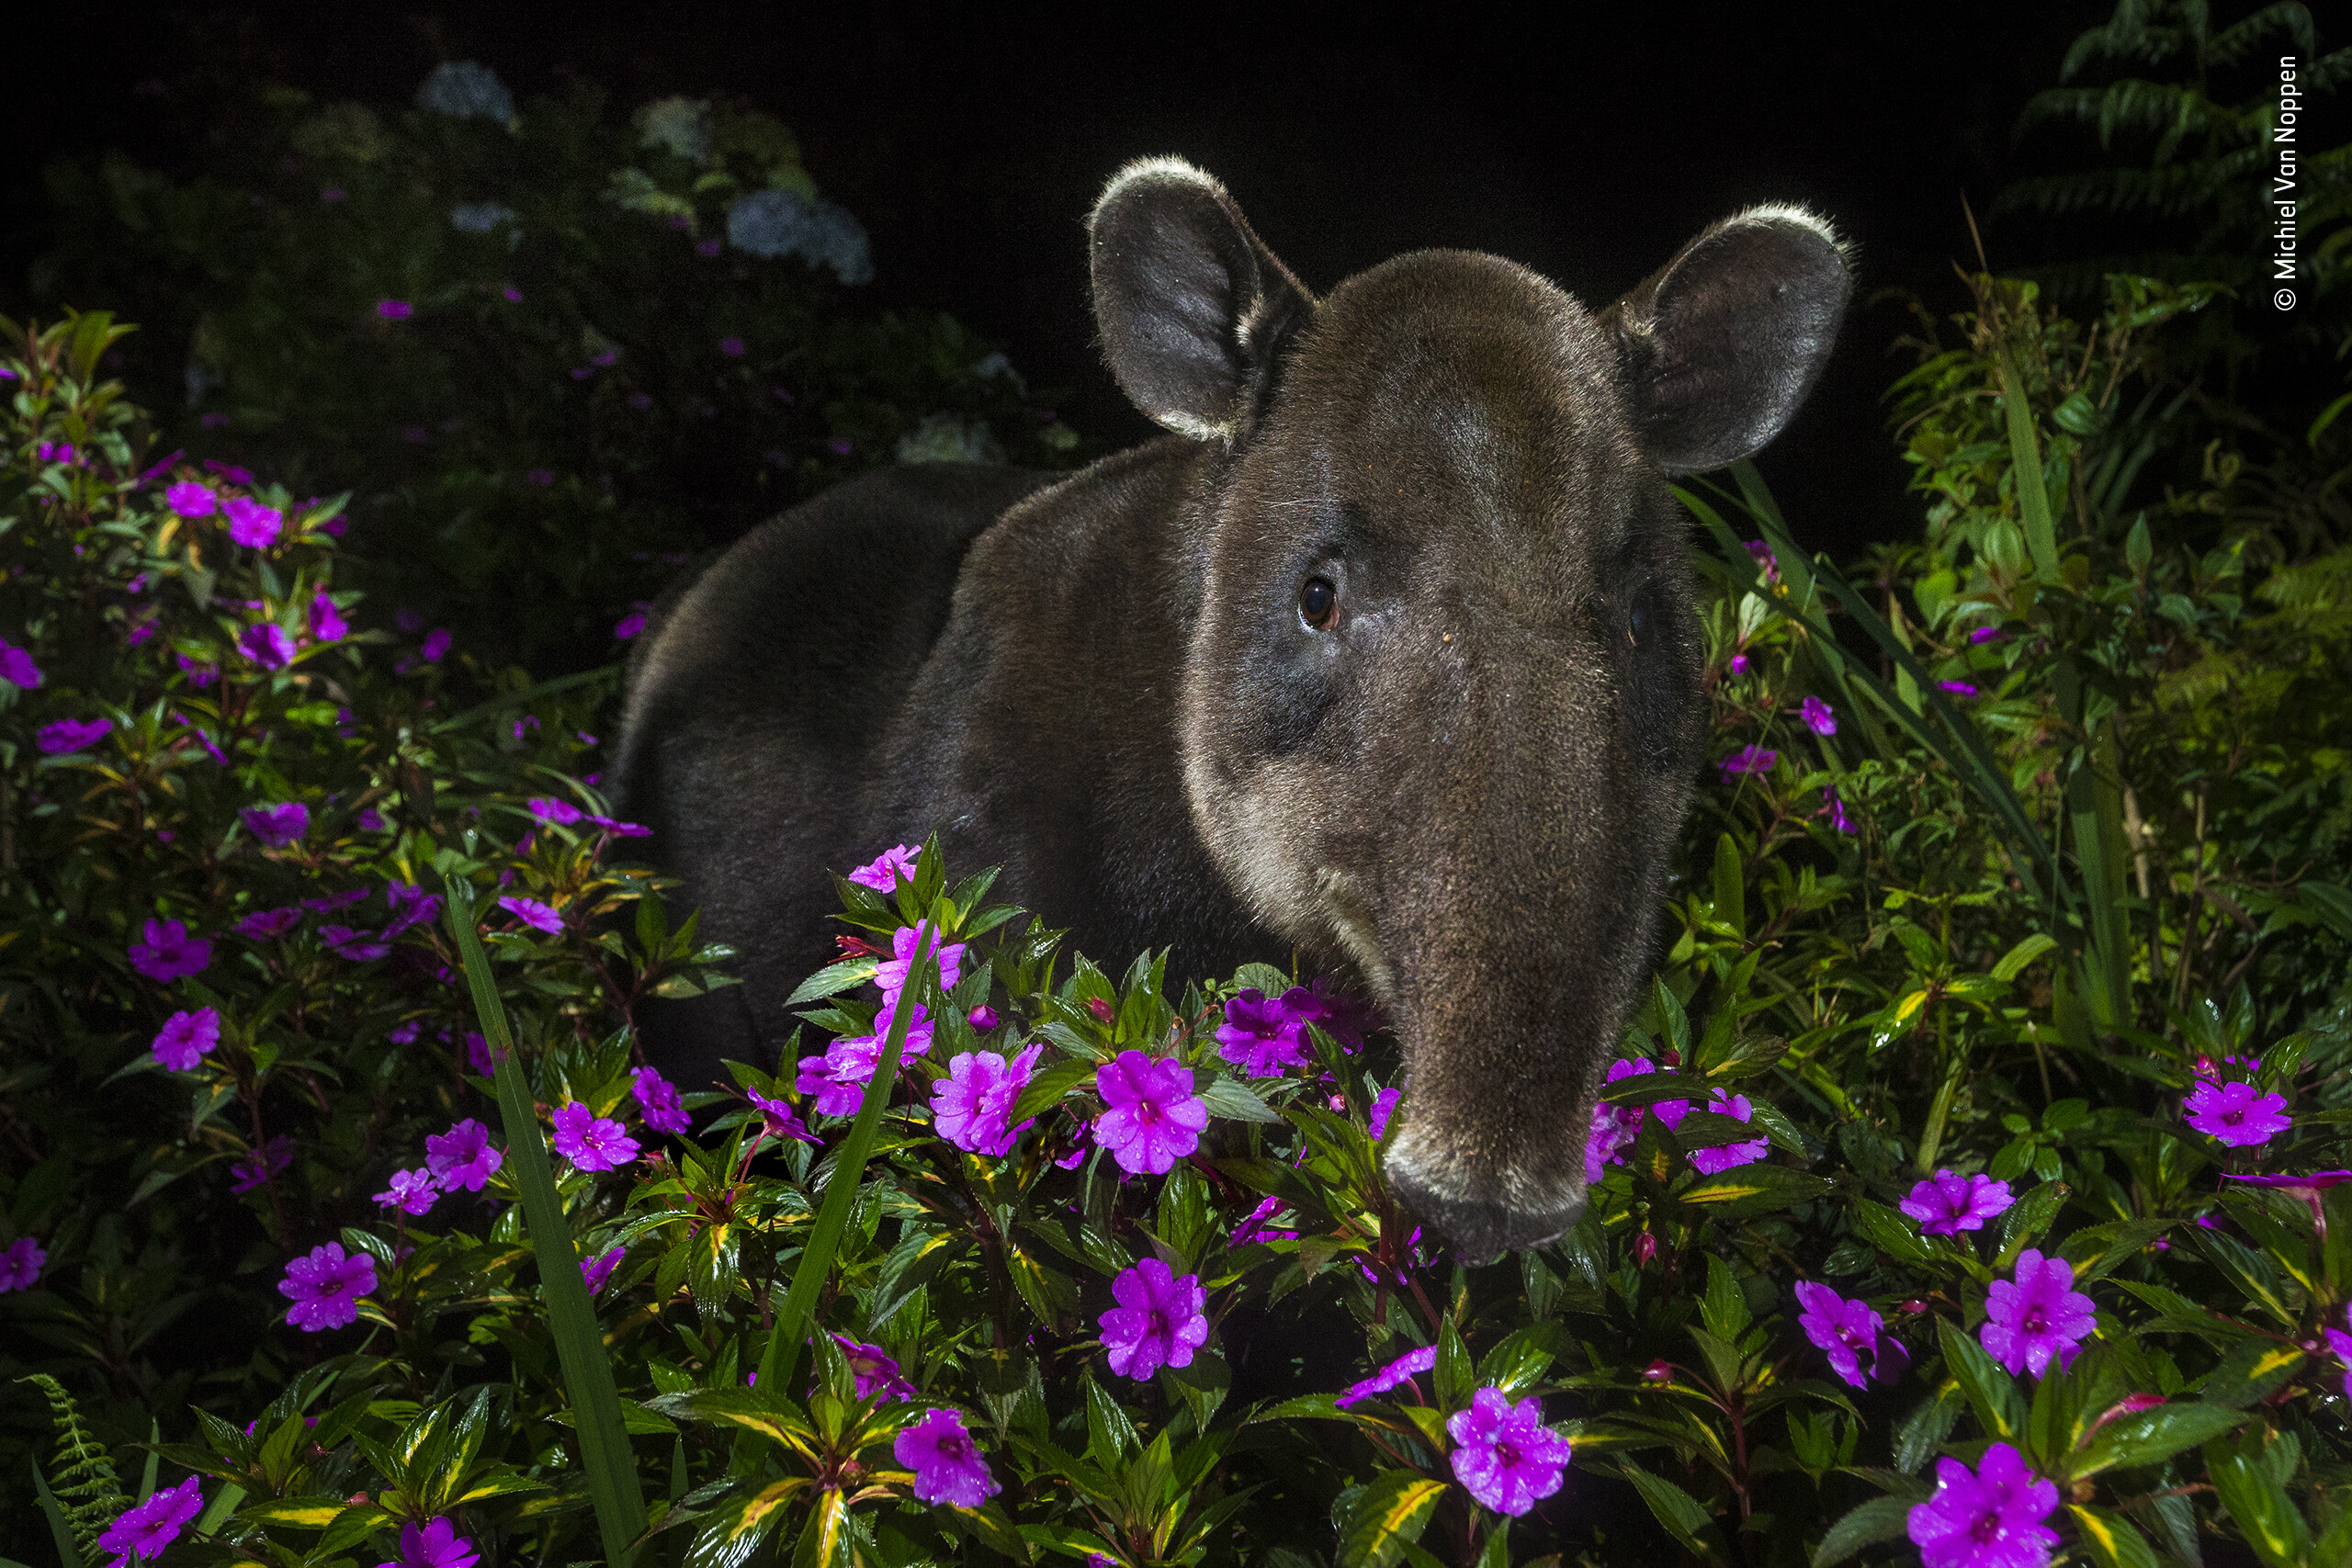 «Ку-ку». Тапир (или «садовник леса») у национального парка Браулио Каррильо, Коста-Рика. Фотограф Мишель Ван Ноппен. People’s Choice Award, 2021